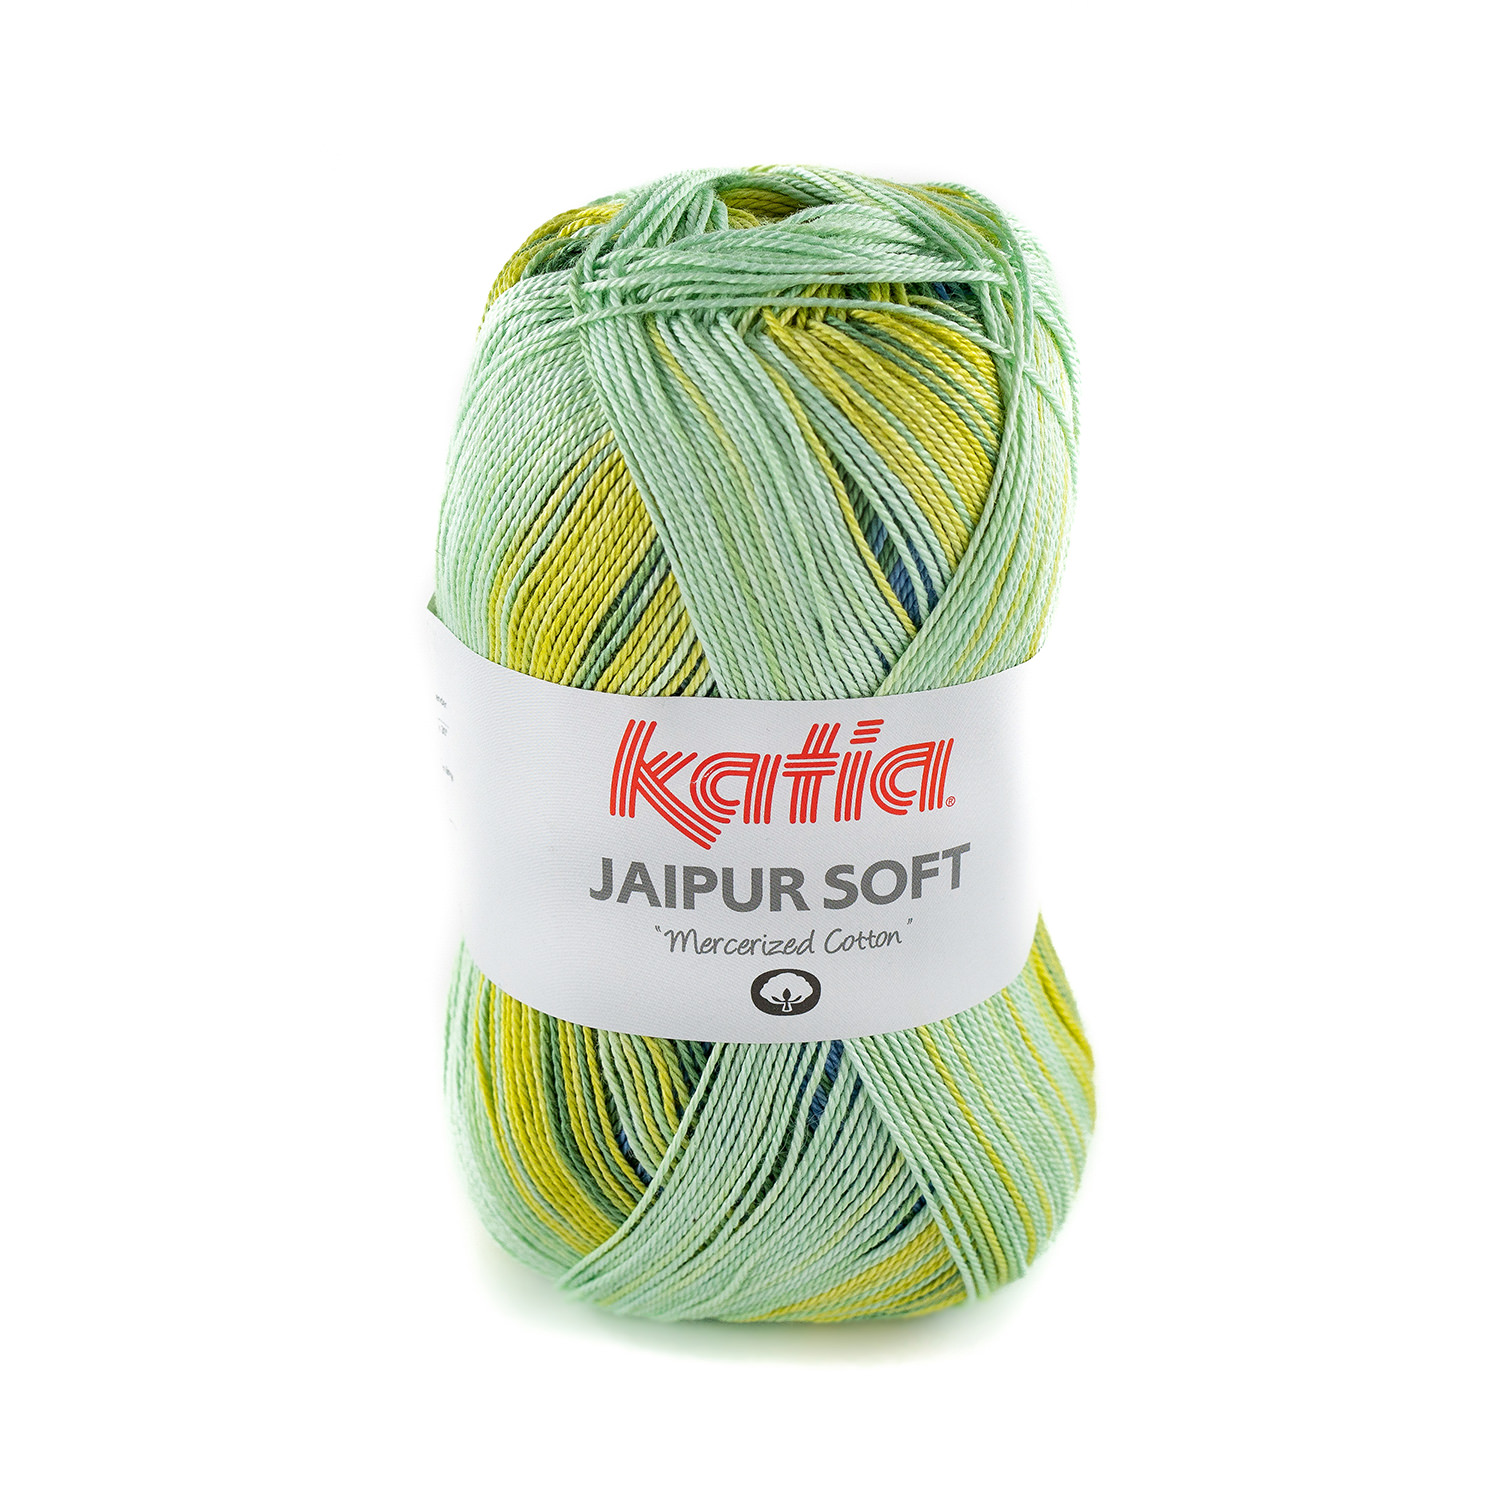 Katia Jaipur Soft 106 gaat eruit!